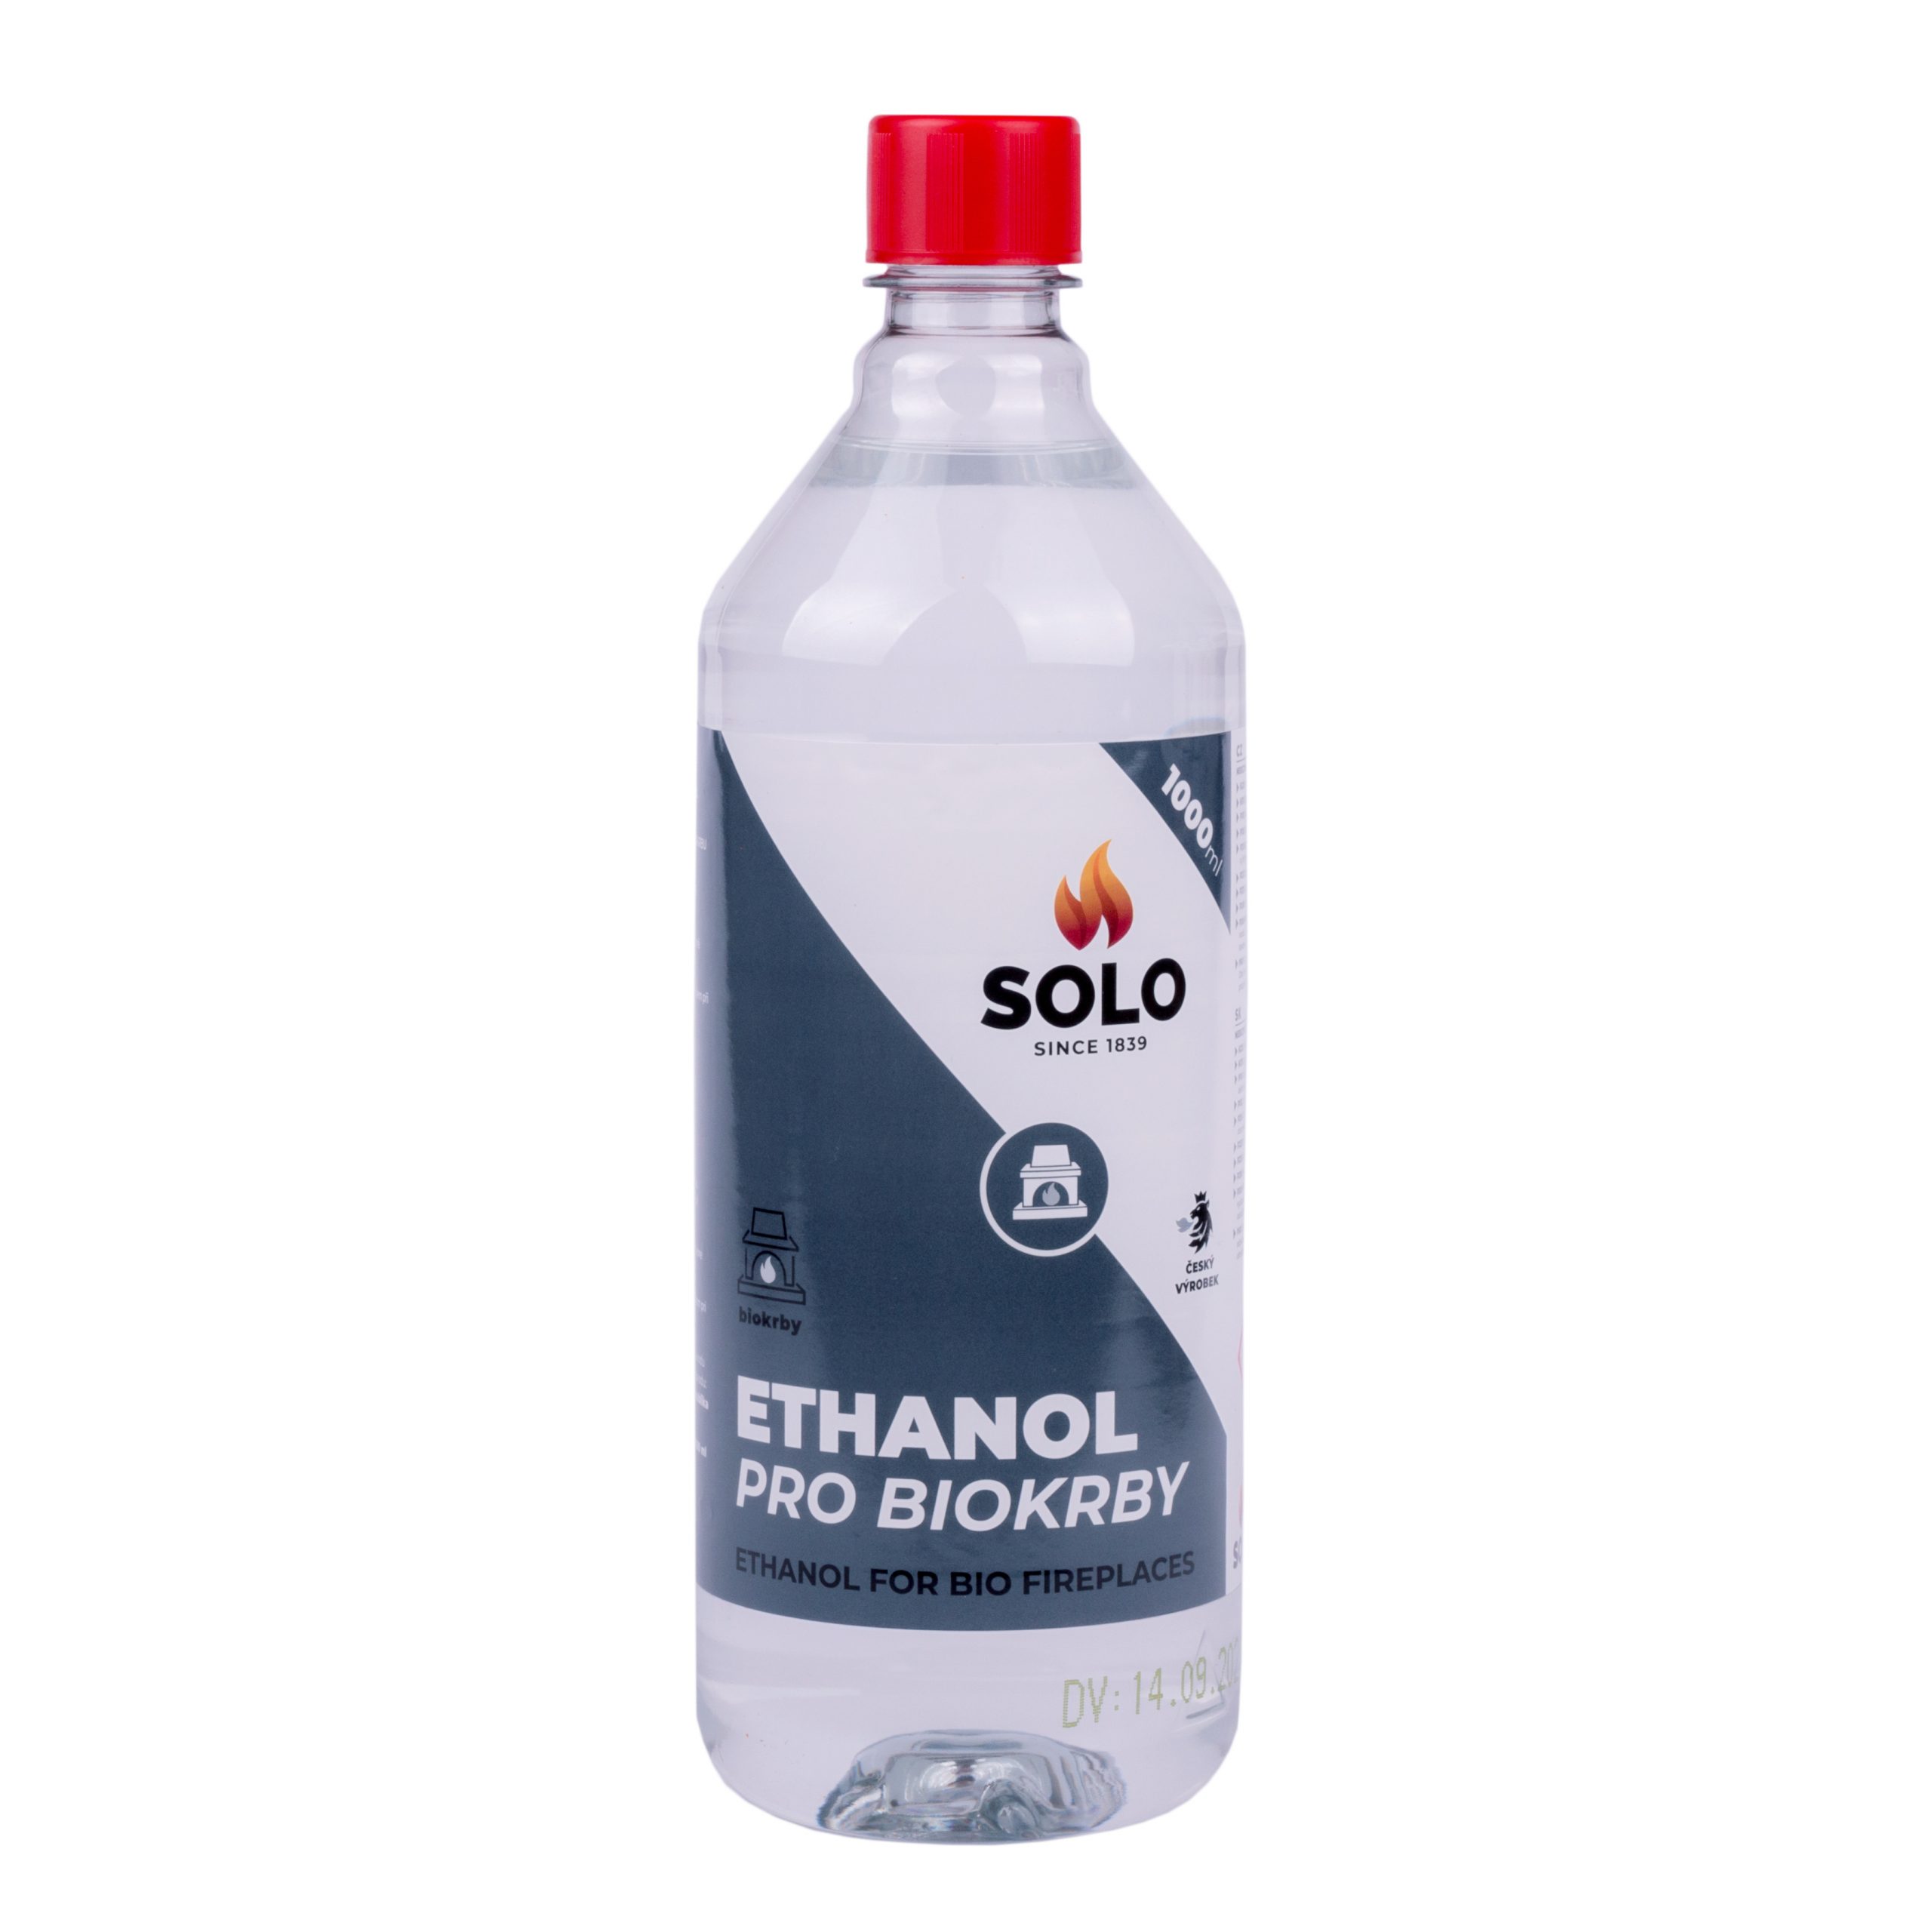 SOLO ETHANOL pro biokrby - 1000 ml